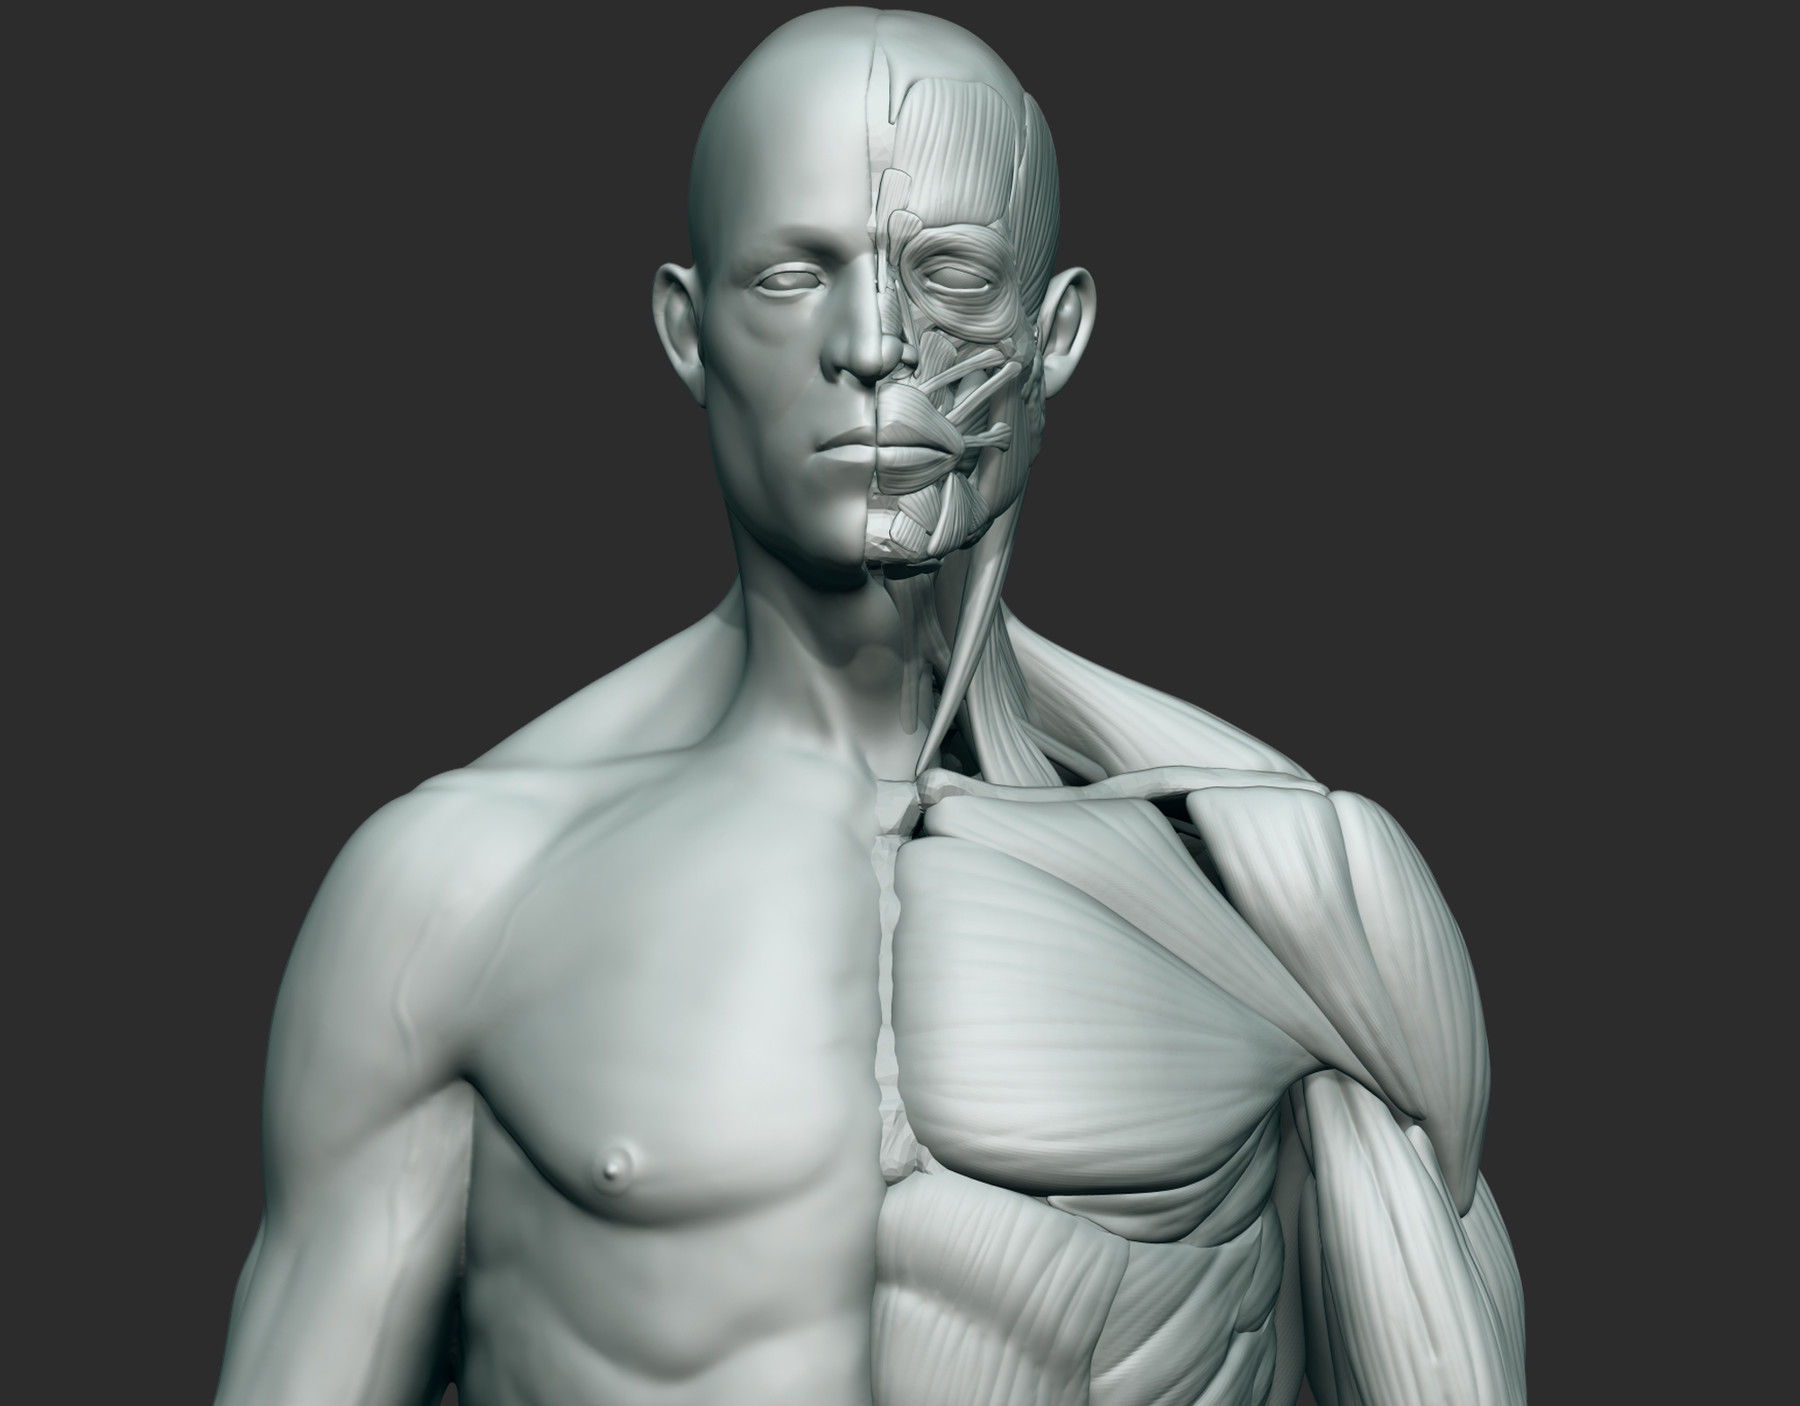 ArtStation - Human male anatomy | Resources